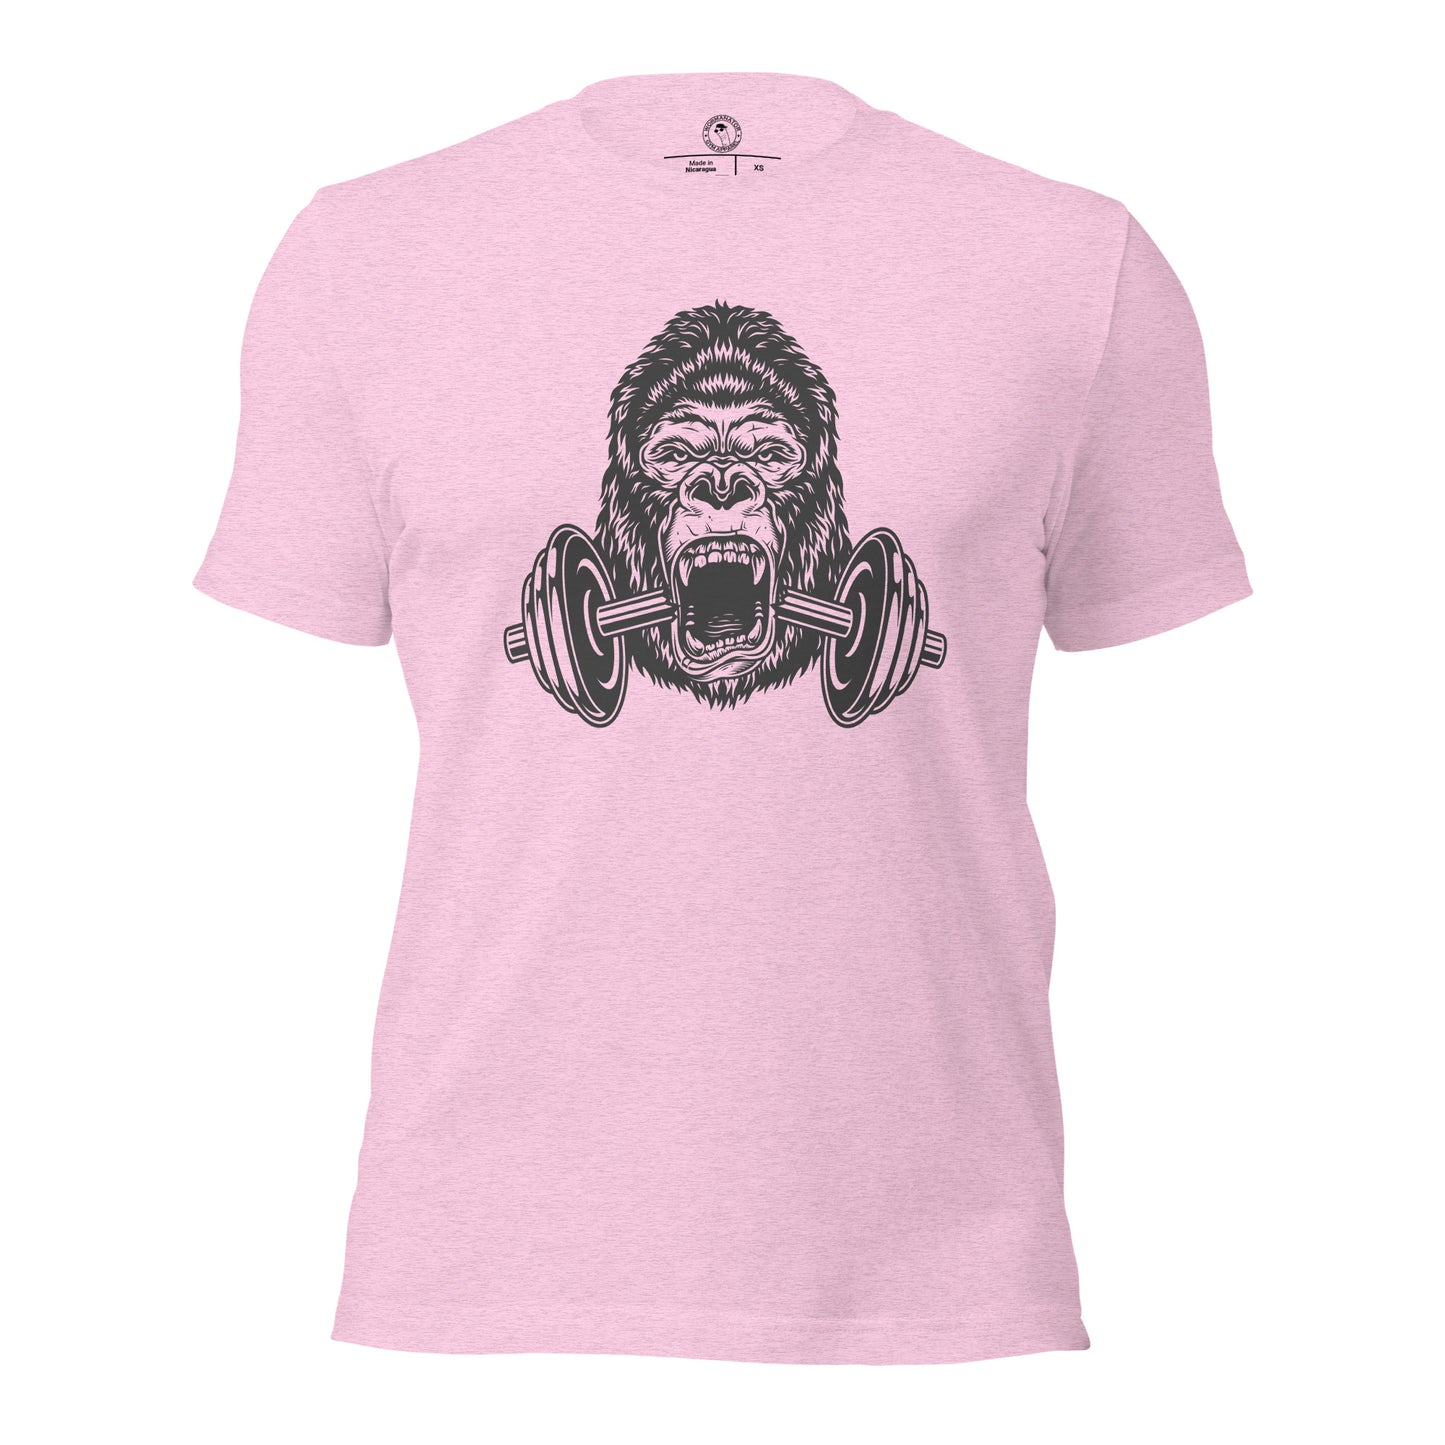 Gorilla Workout Shirt in Heather Prism Lilac